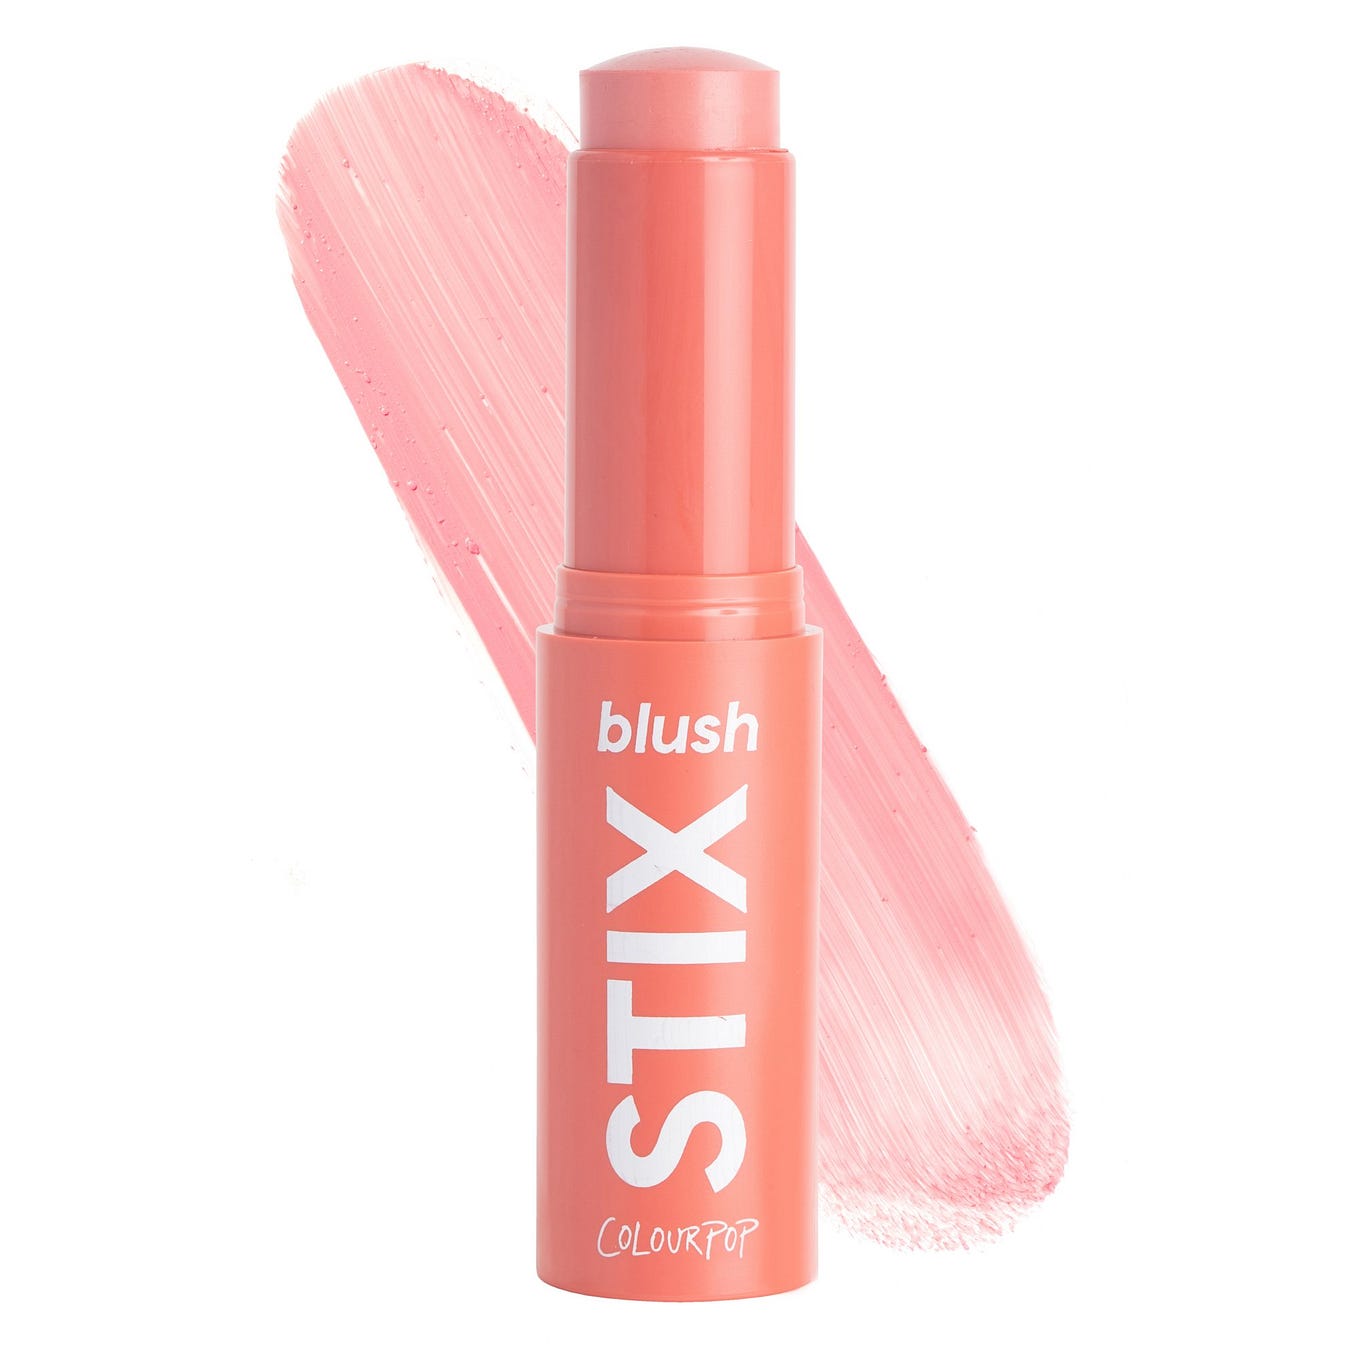 What’s in the ColourPop Blush Stix?